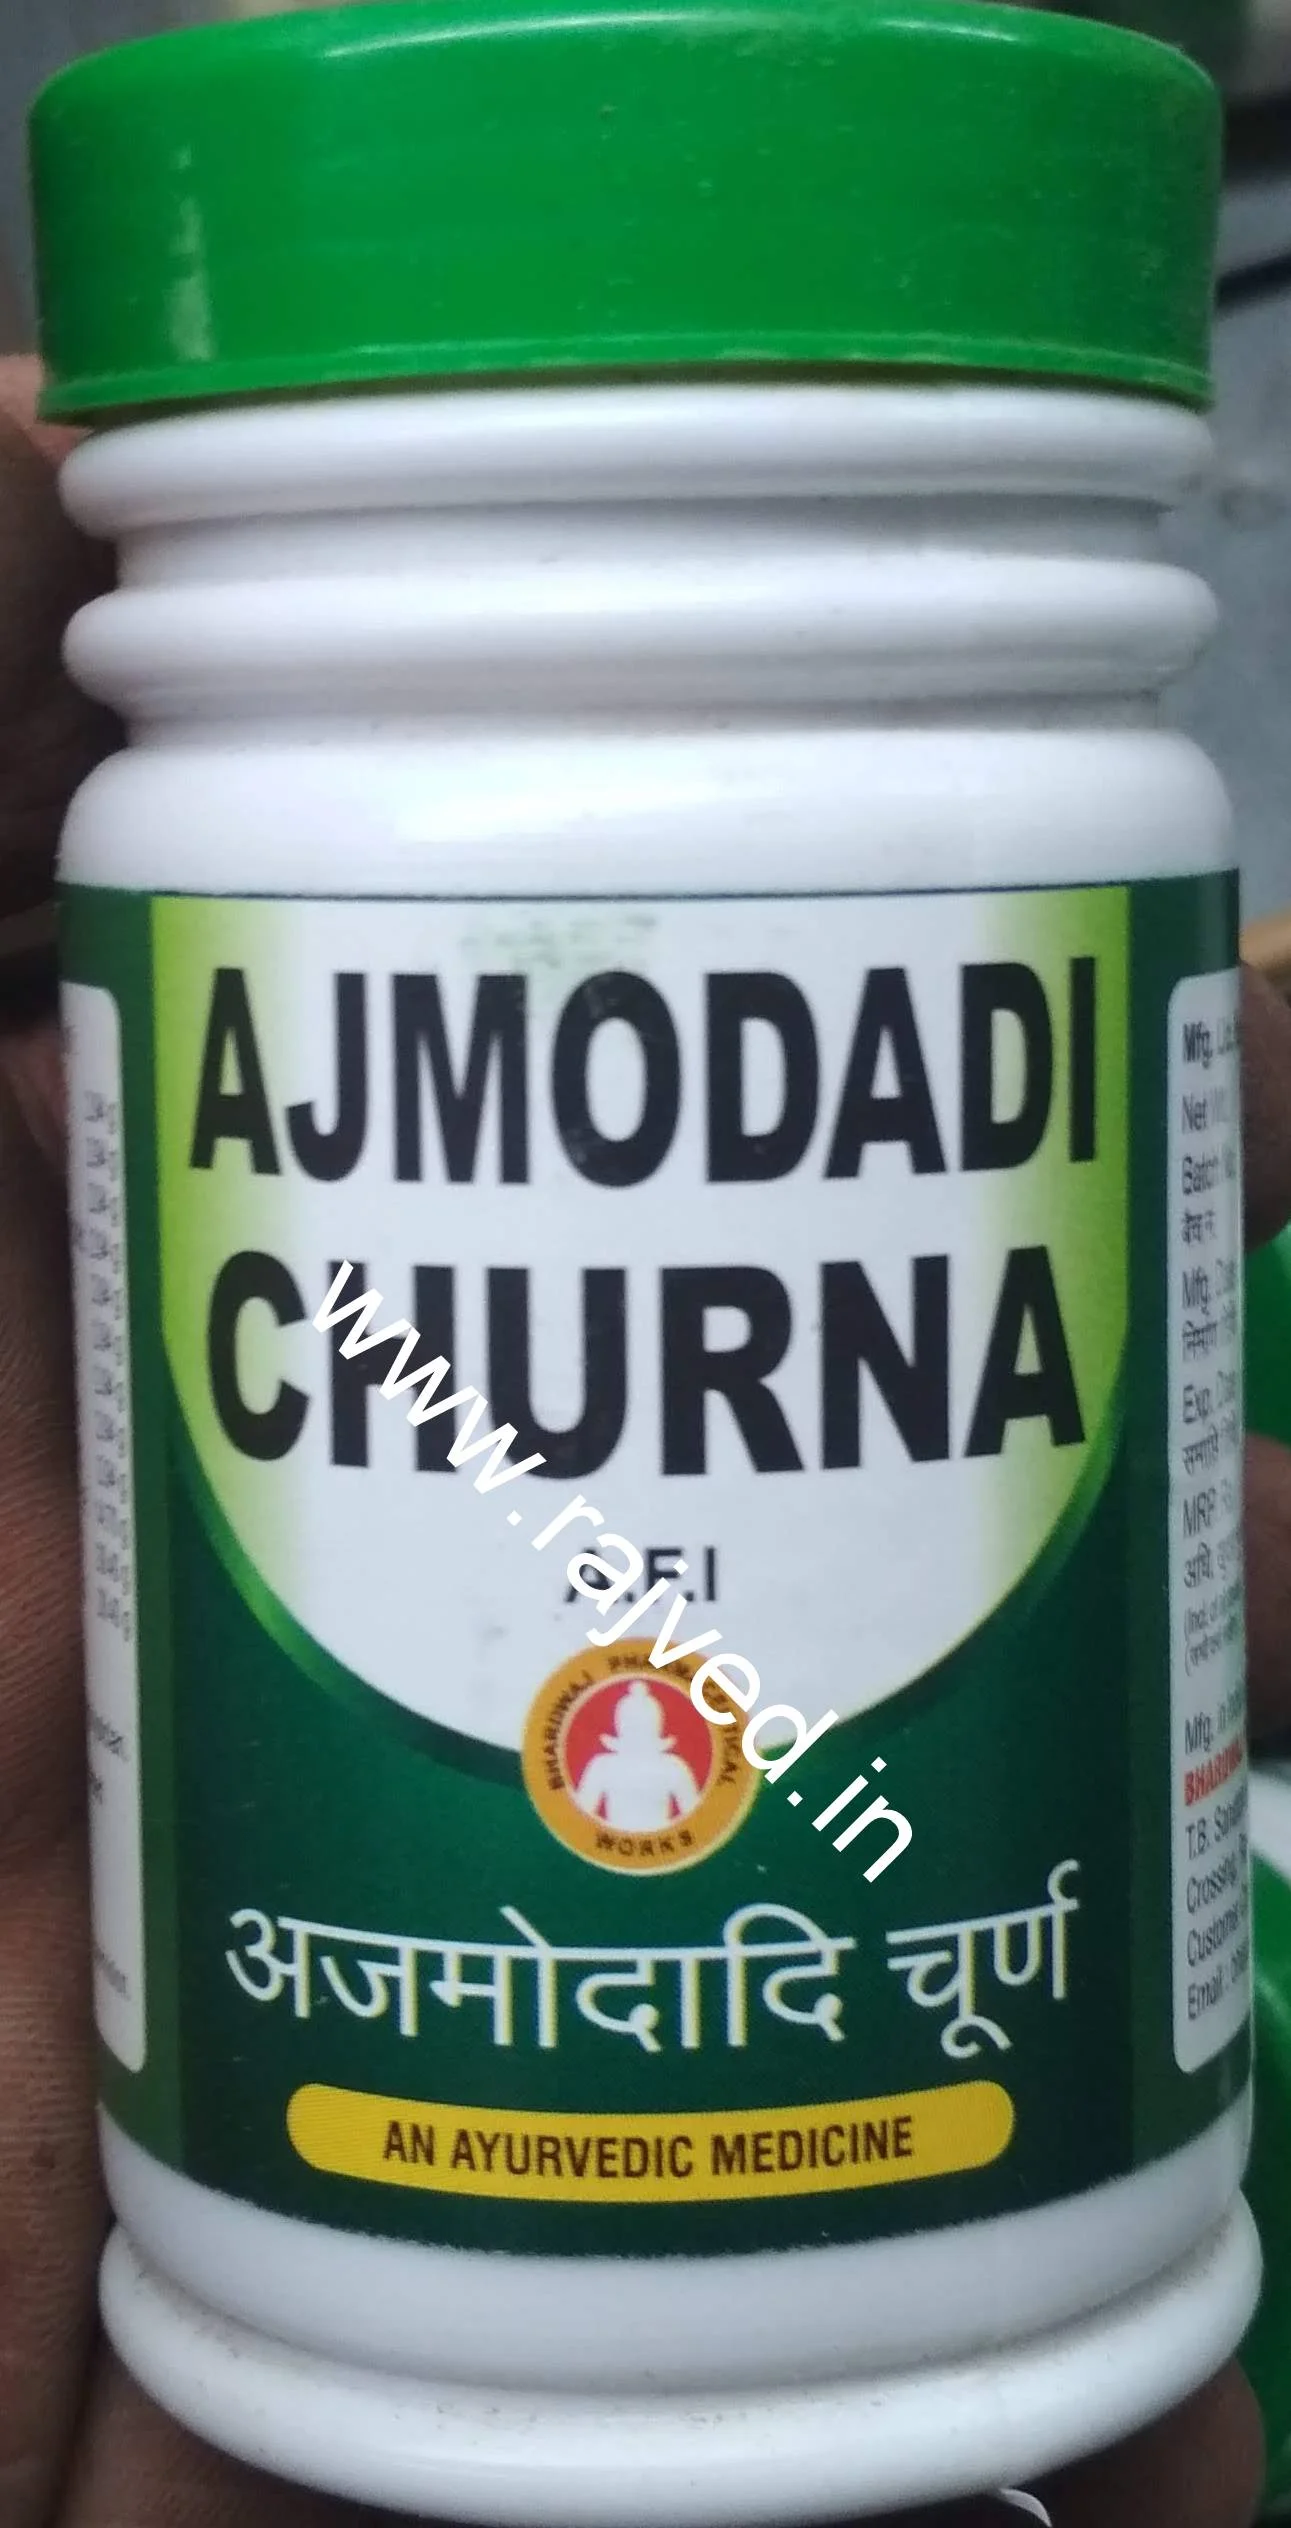 ajmodadi churna 1 kg upto 20% off bharadwaj pharmaceuticals indore